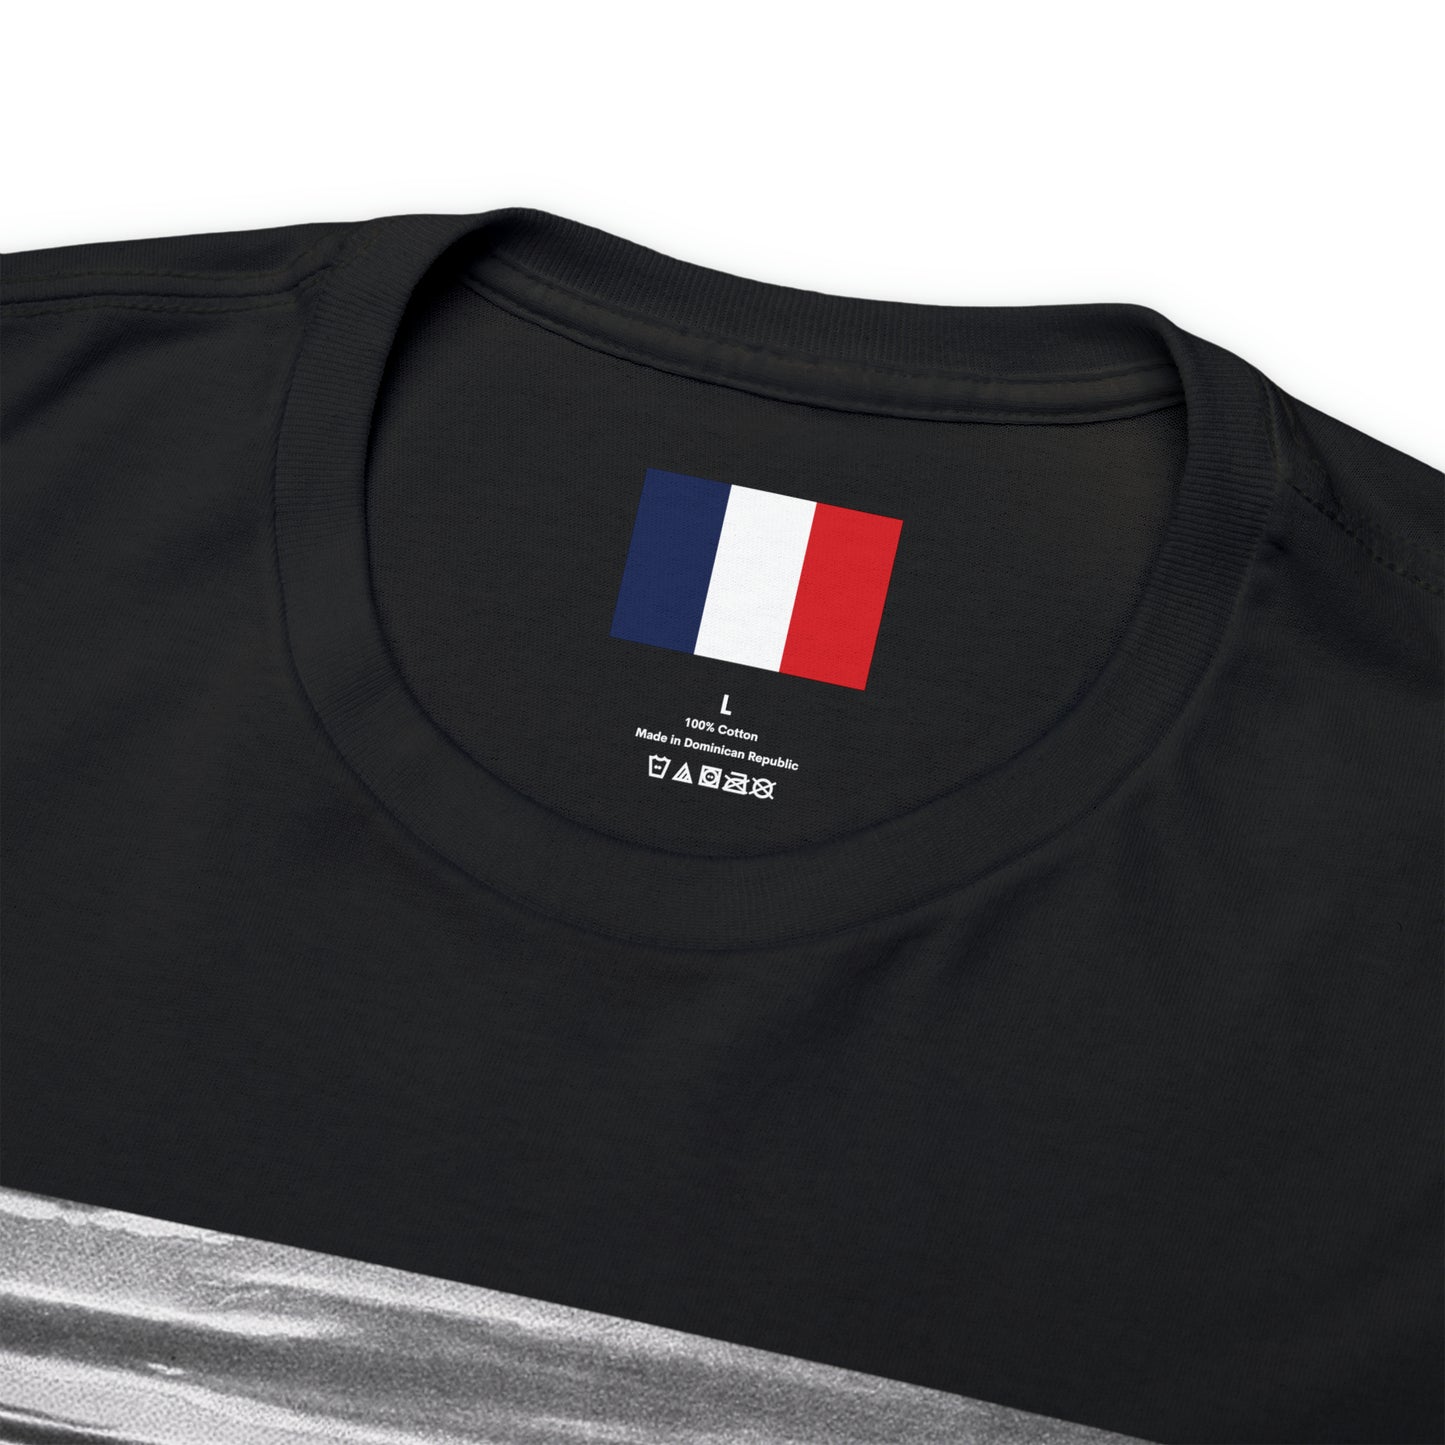 Napoleon T-Shirt